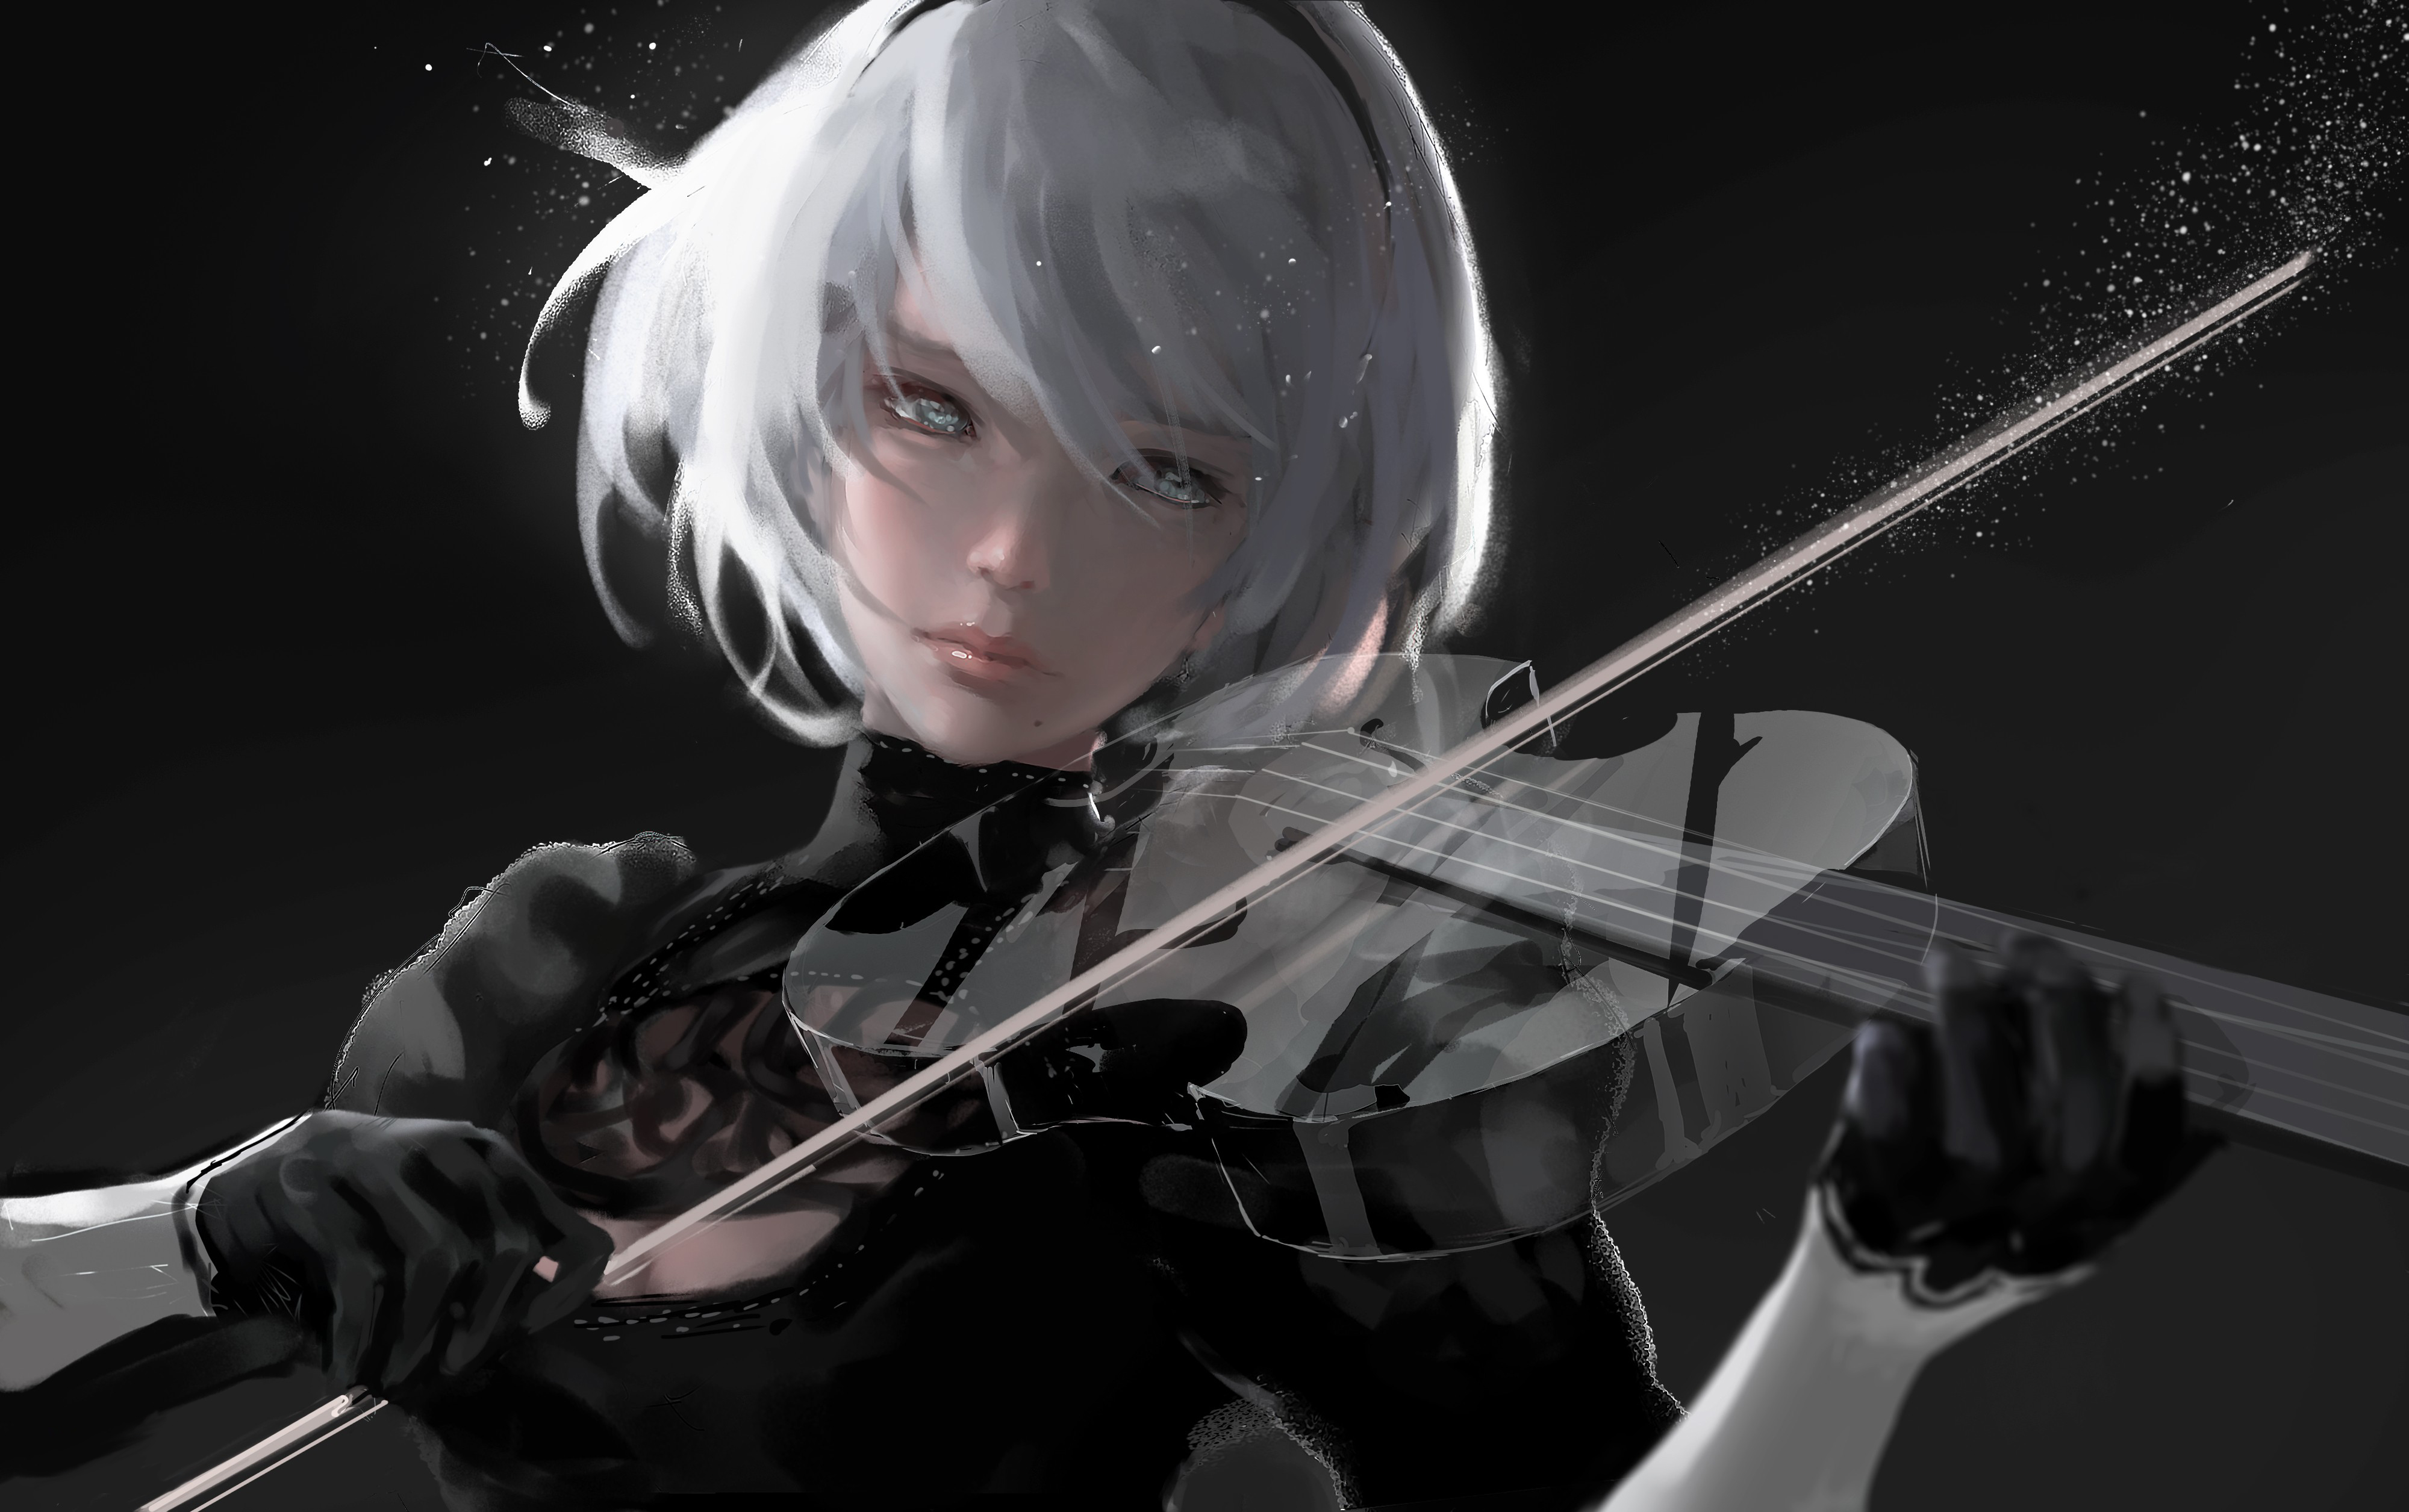 NieR Playing Violin by Wang Ling